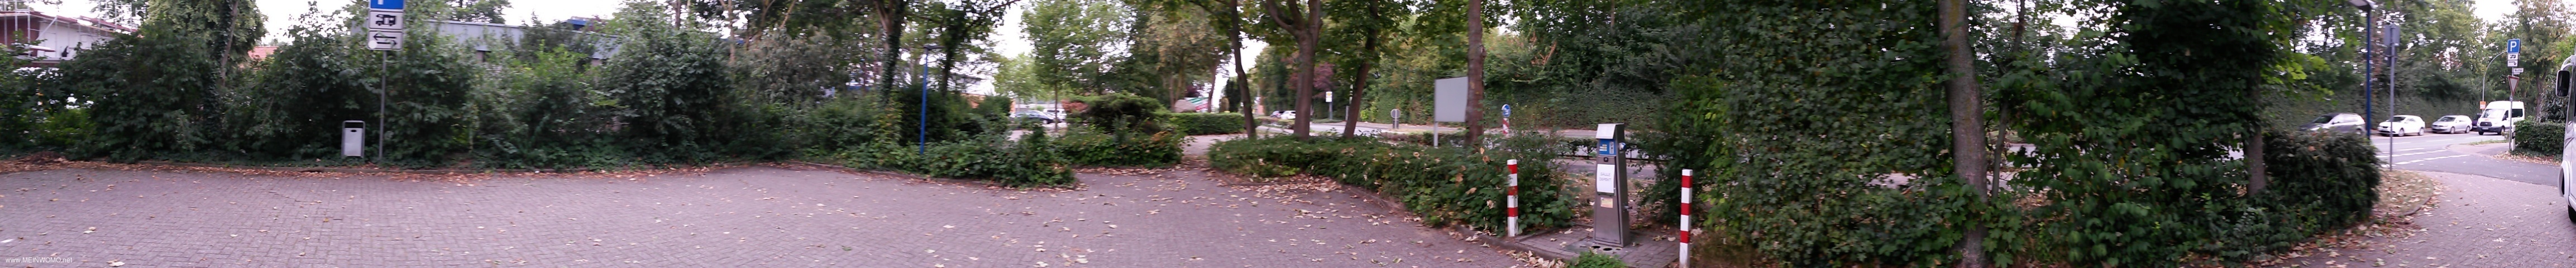  Sendenhorst fermer place de parking